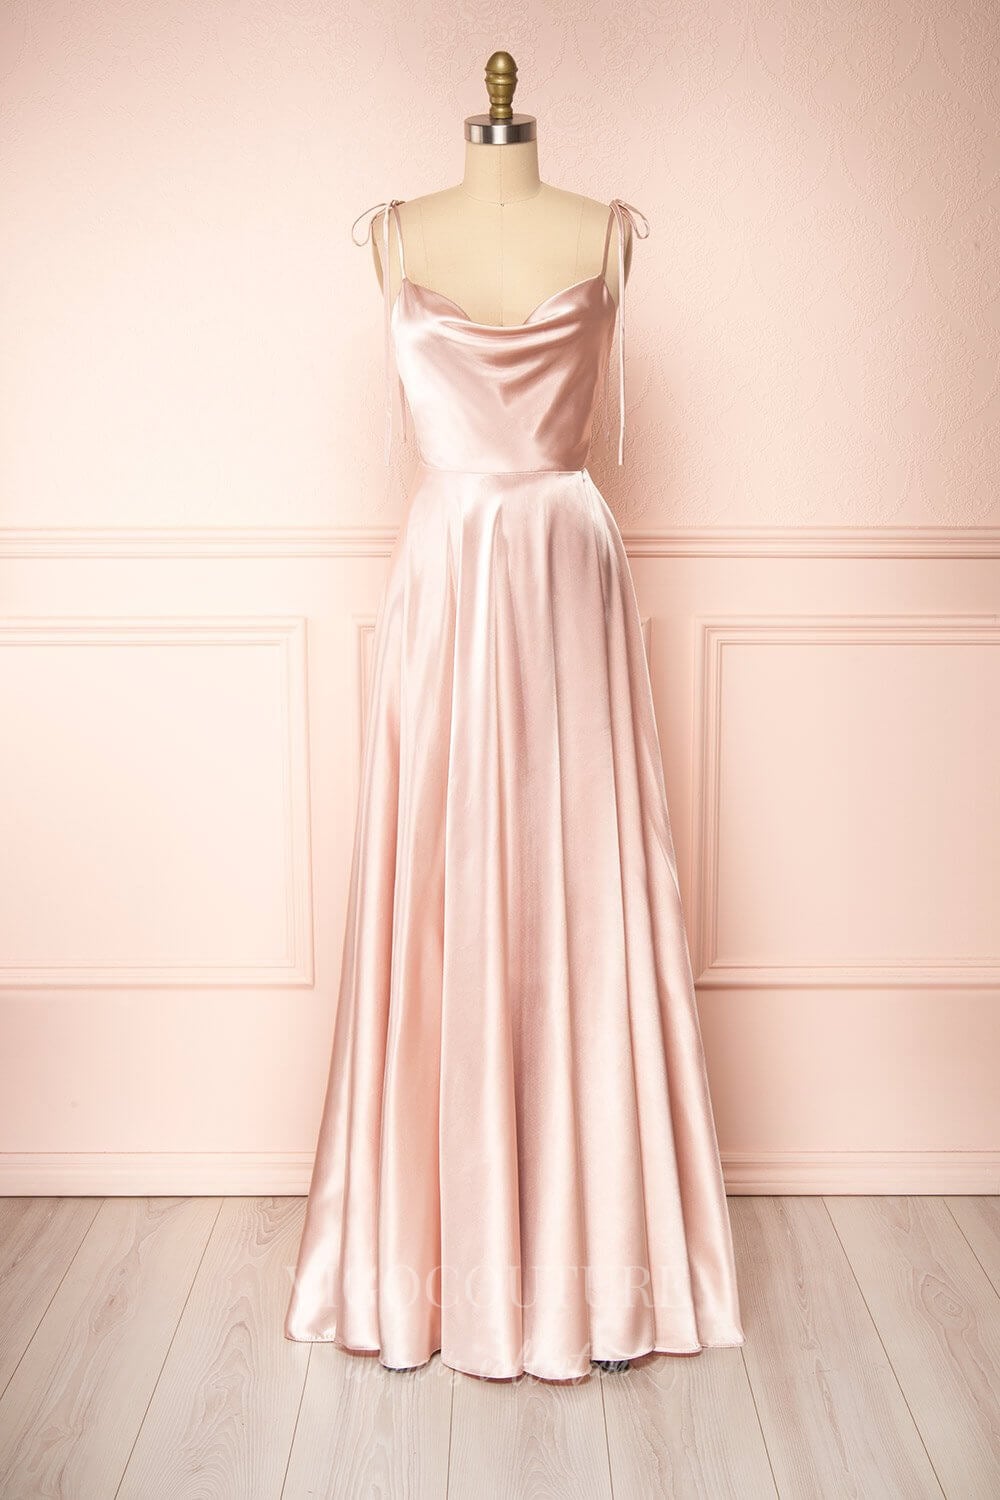 vigocouture-Burgundy Spaghetti Strap Prom Dress 20576-Prom Dresses-vigocouture-Blush-US2-